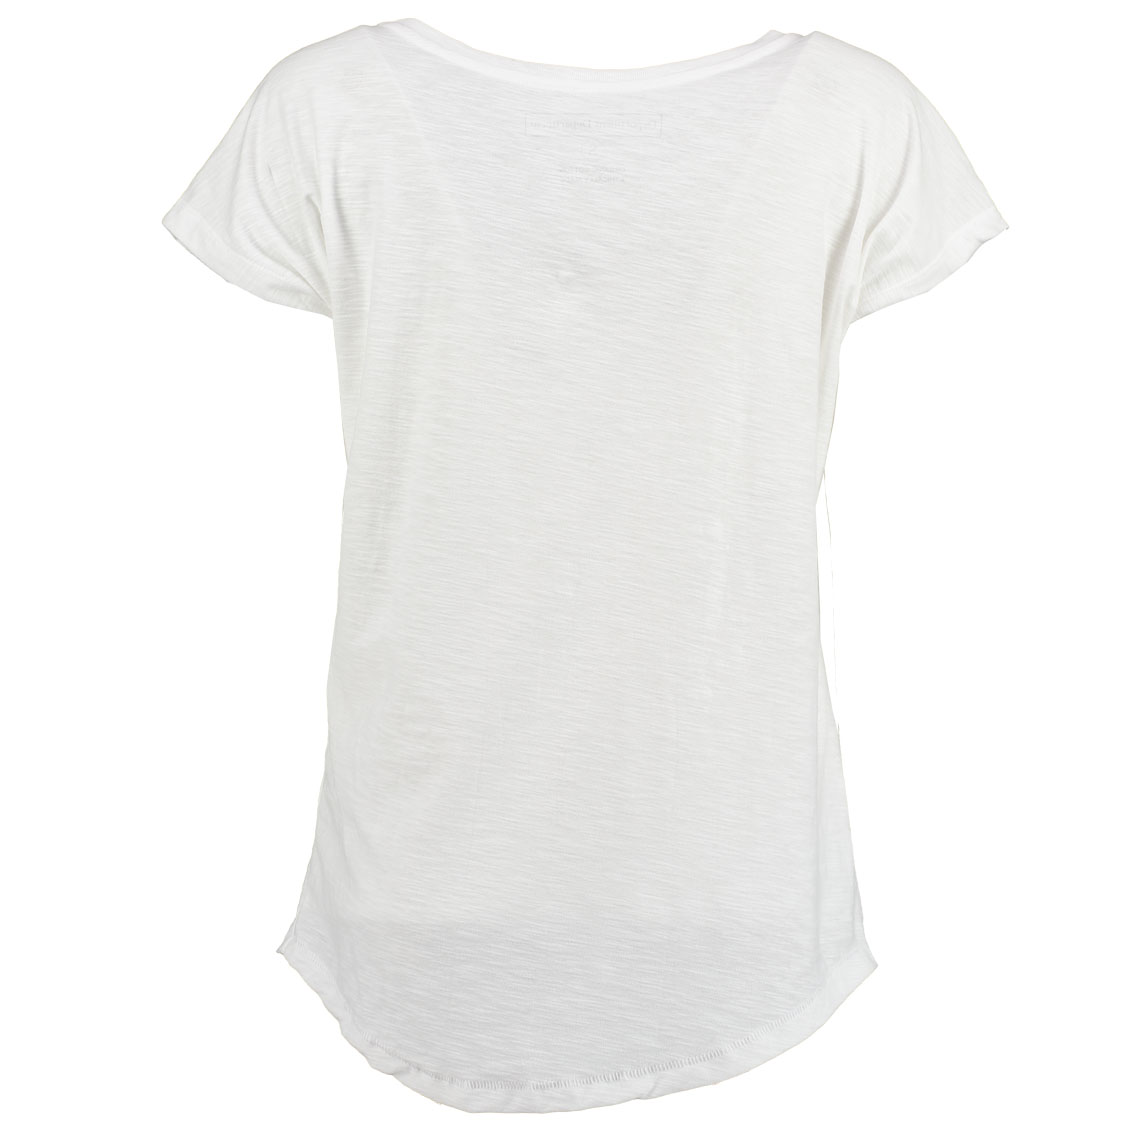 Deportment Department T shirt womens white back